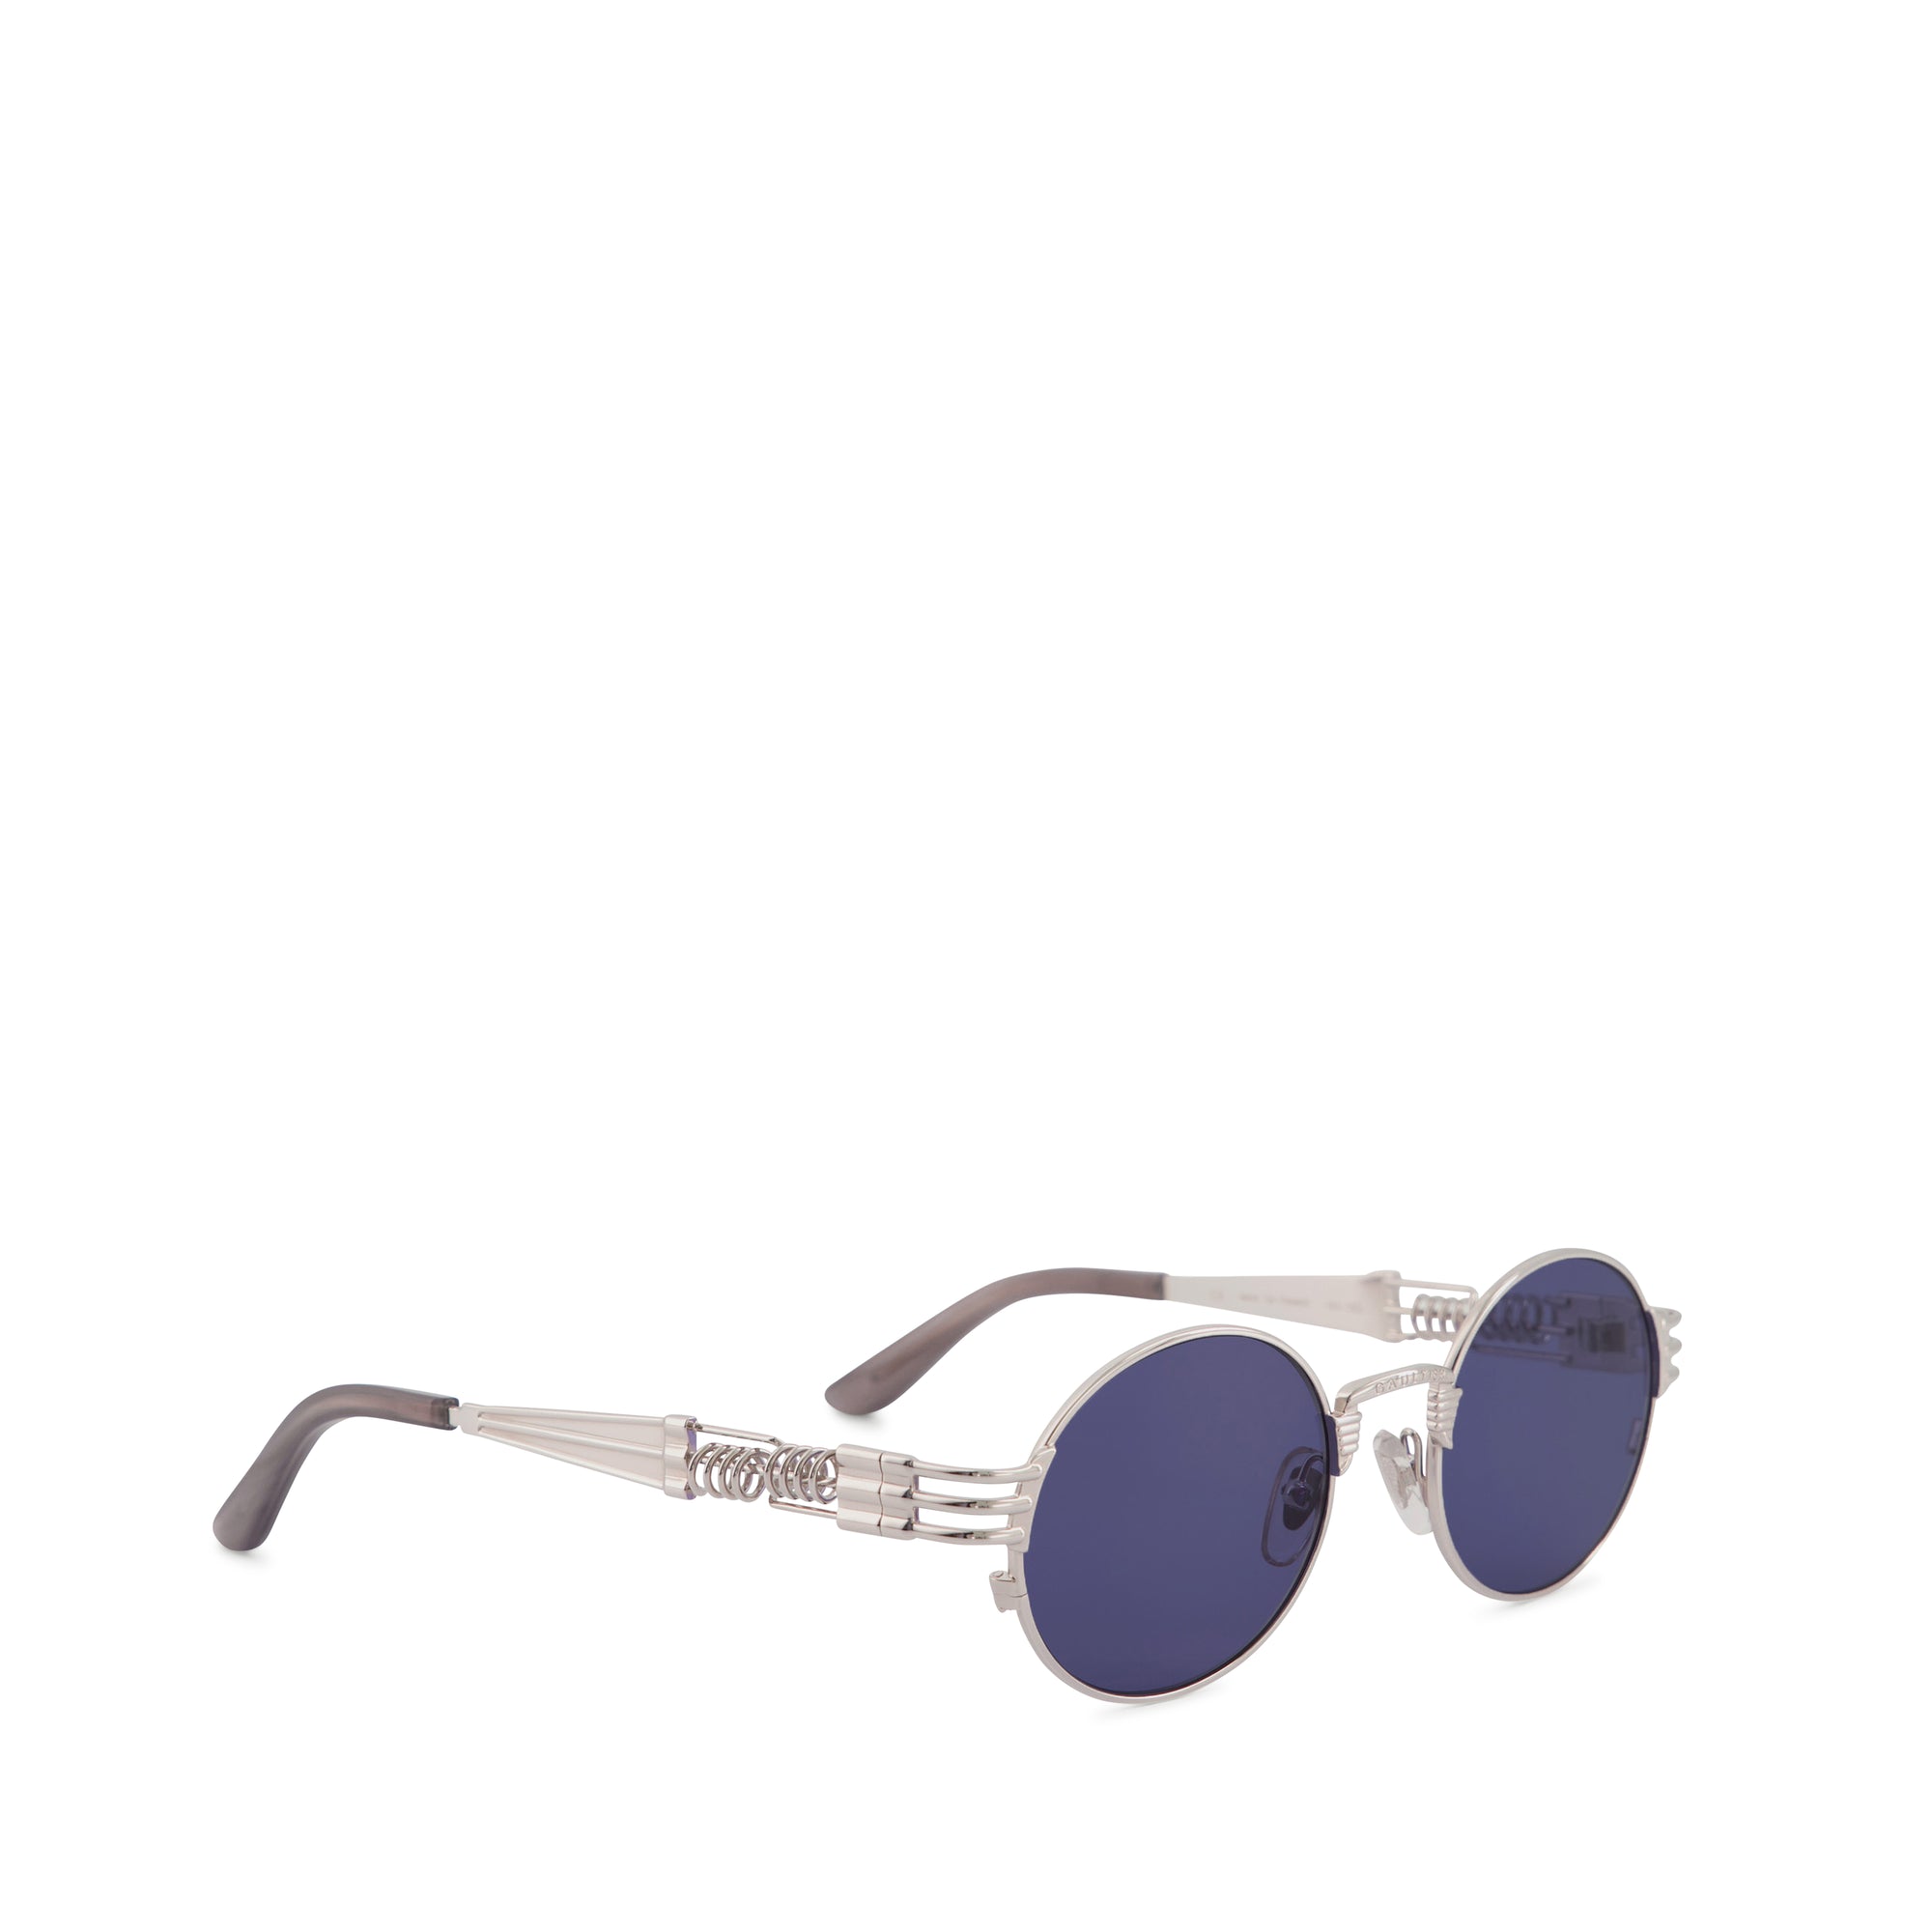 Jean Paul Gaultier - 56-6106 Sunglasses - (Silver) view 2